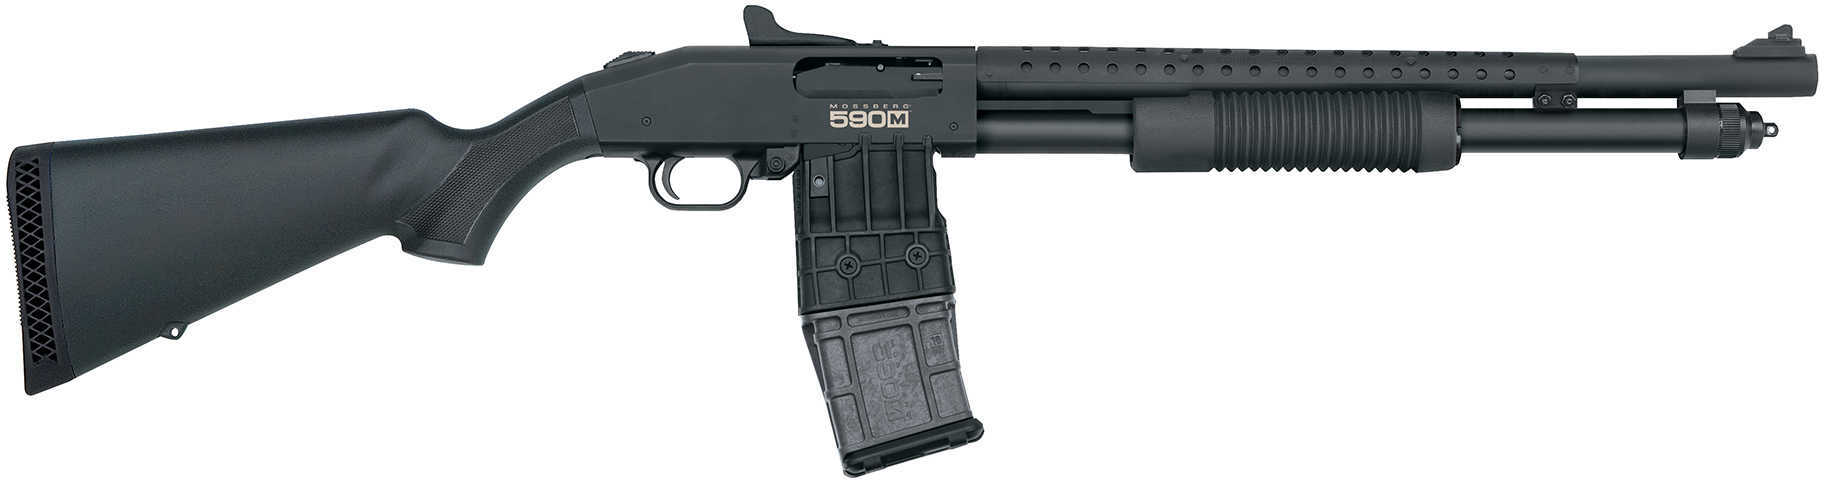 Mossberg 590m Mag Fed Pump Action Shotgun 12 Gauge 2 3 4 Chamber 18 5